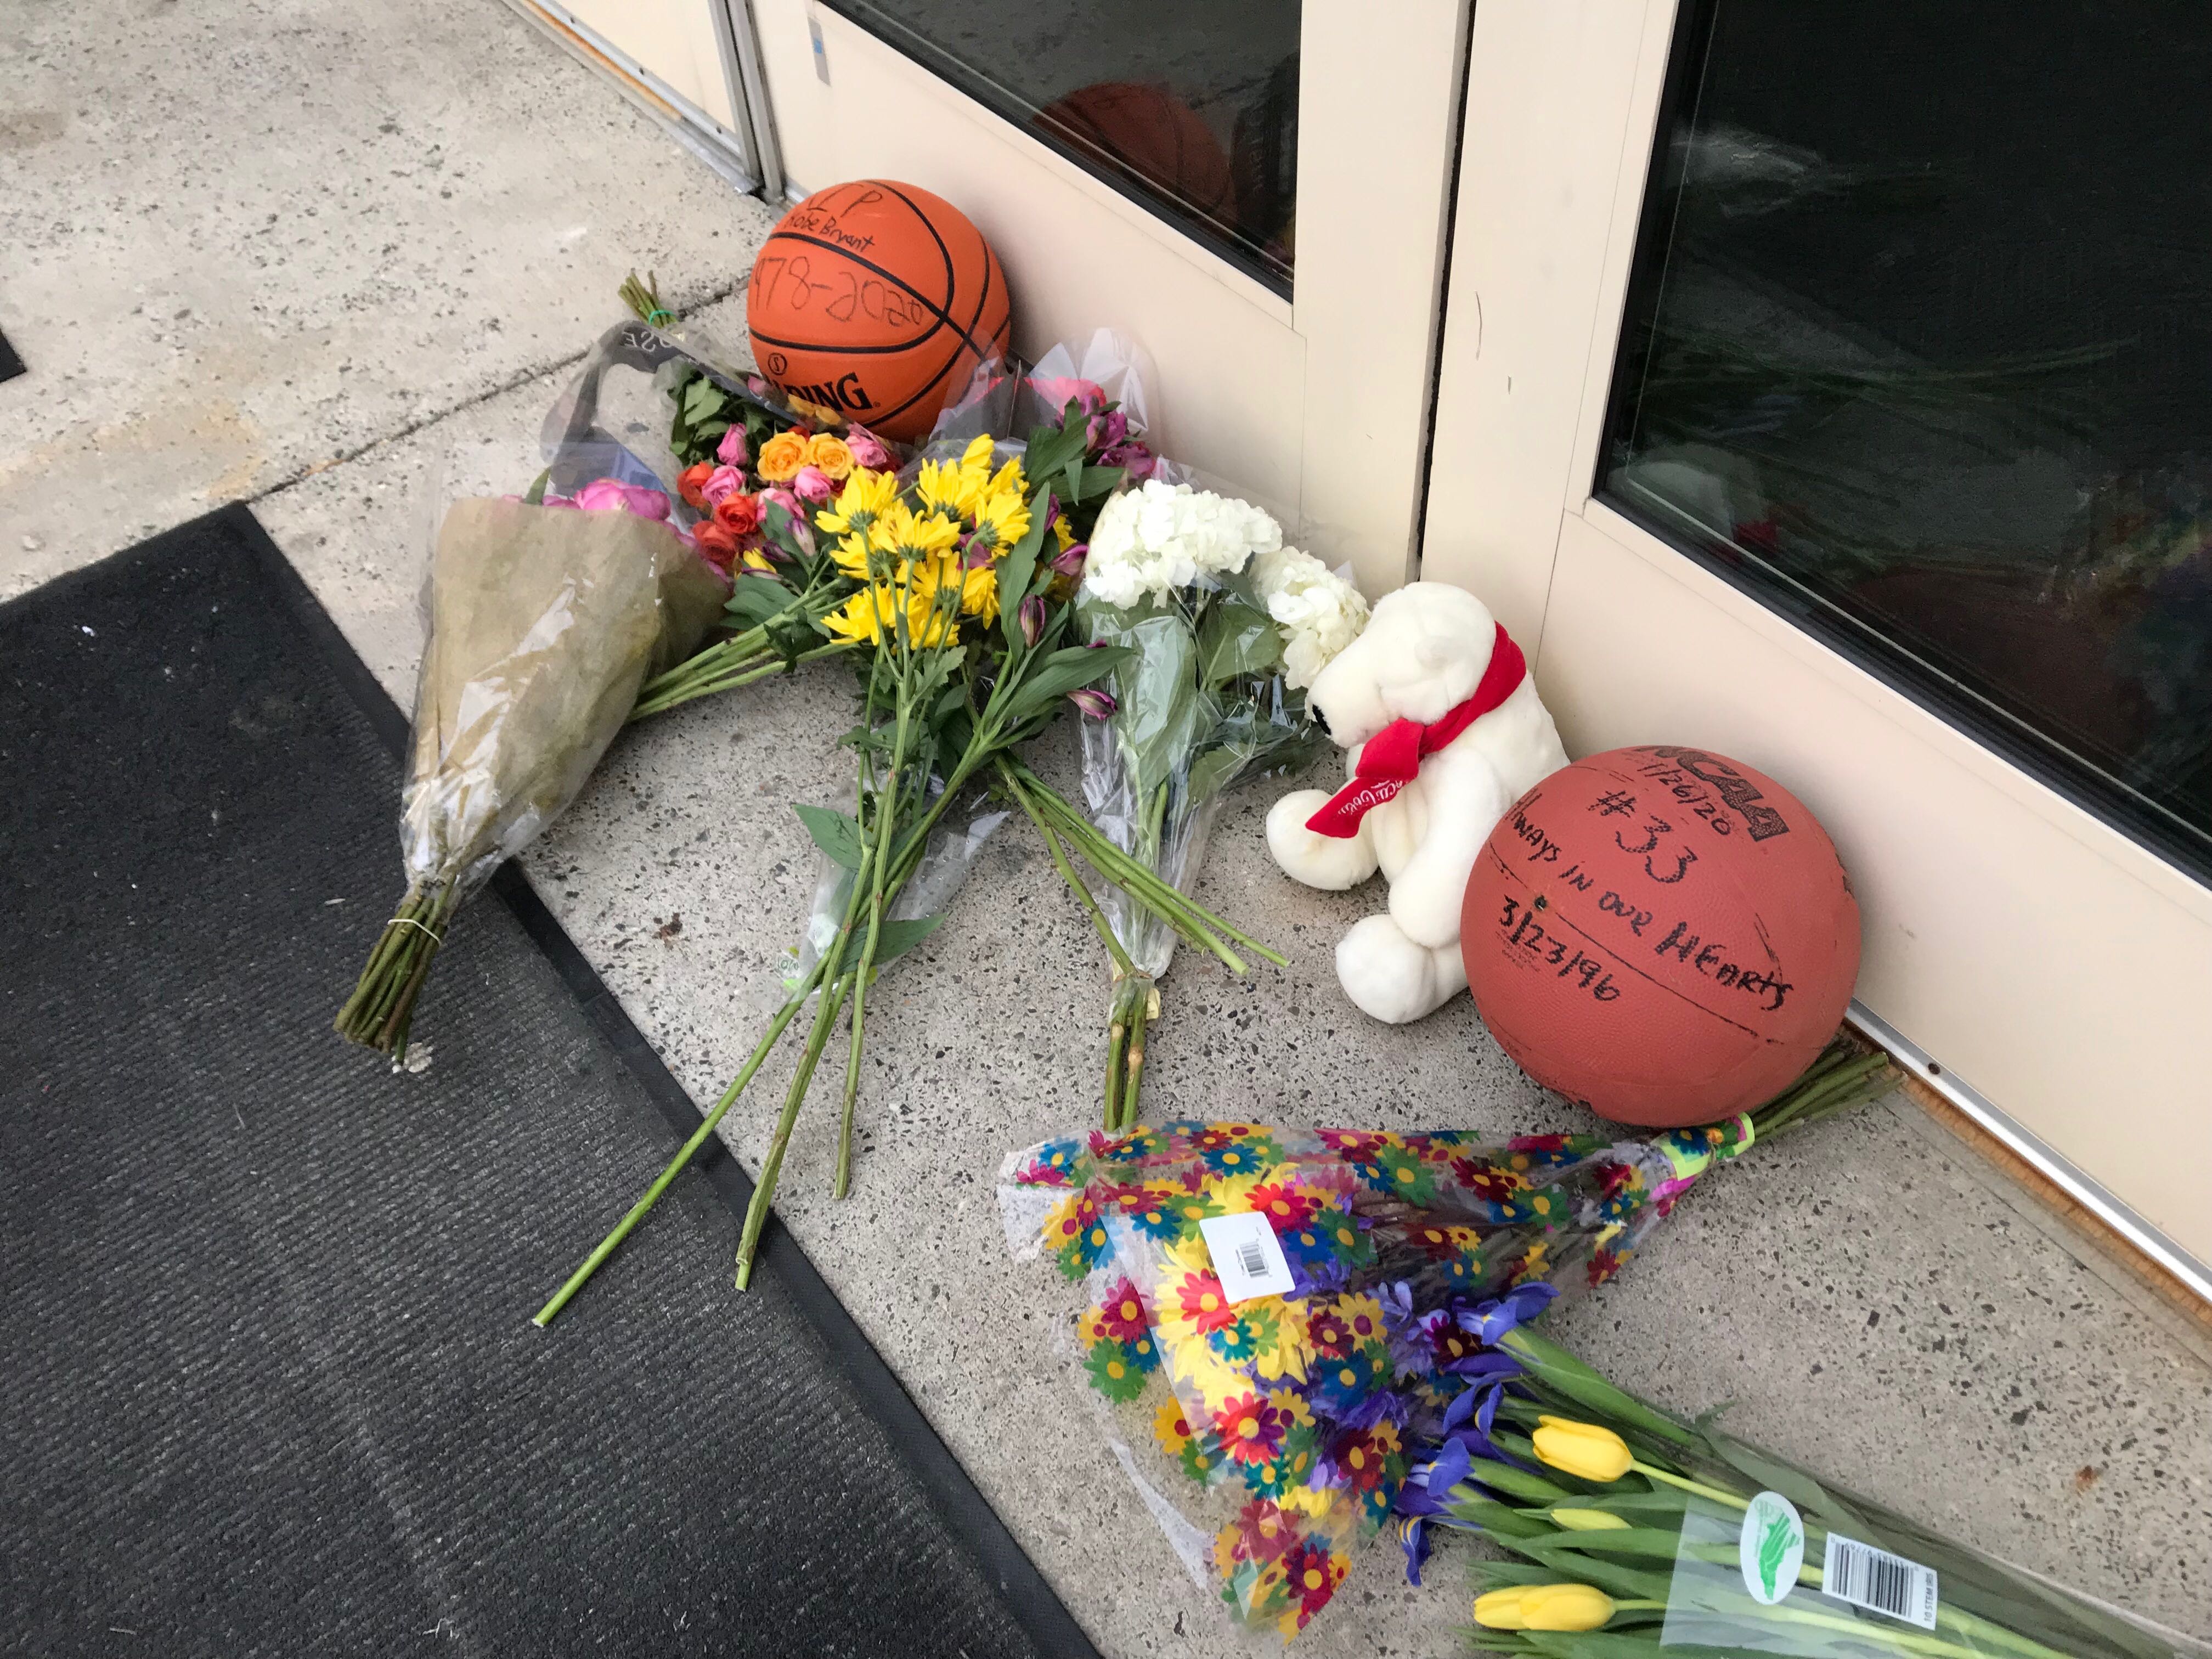 REMEMBERING KOBE: Philadelphia 76ers pay tribute to Bryant during